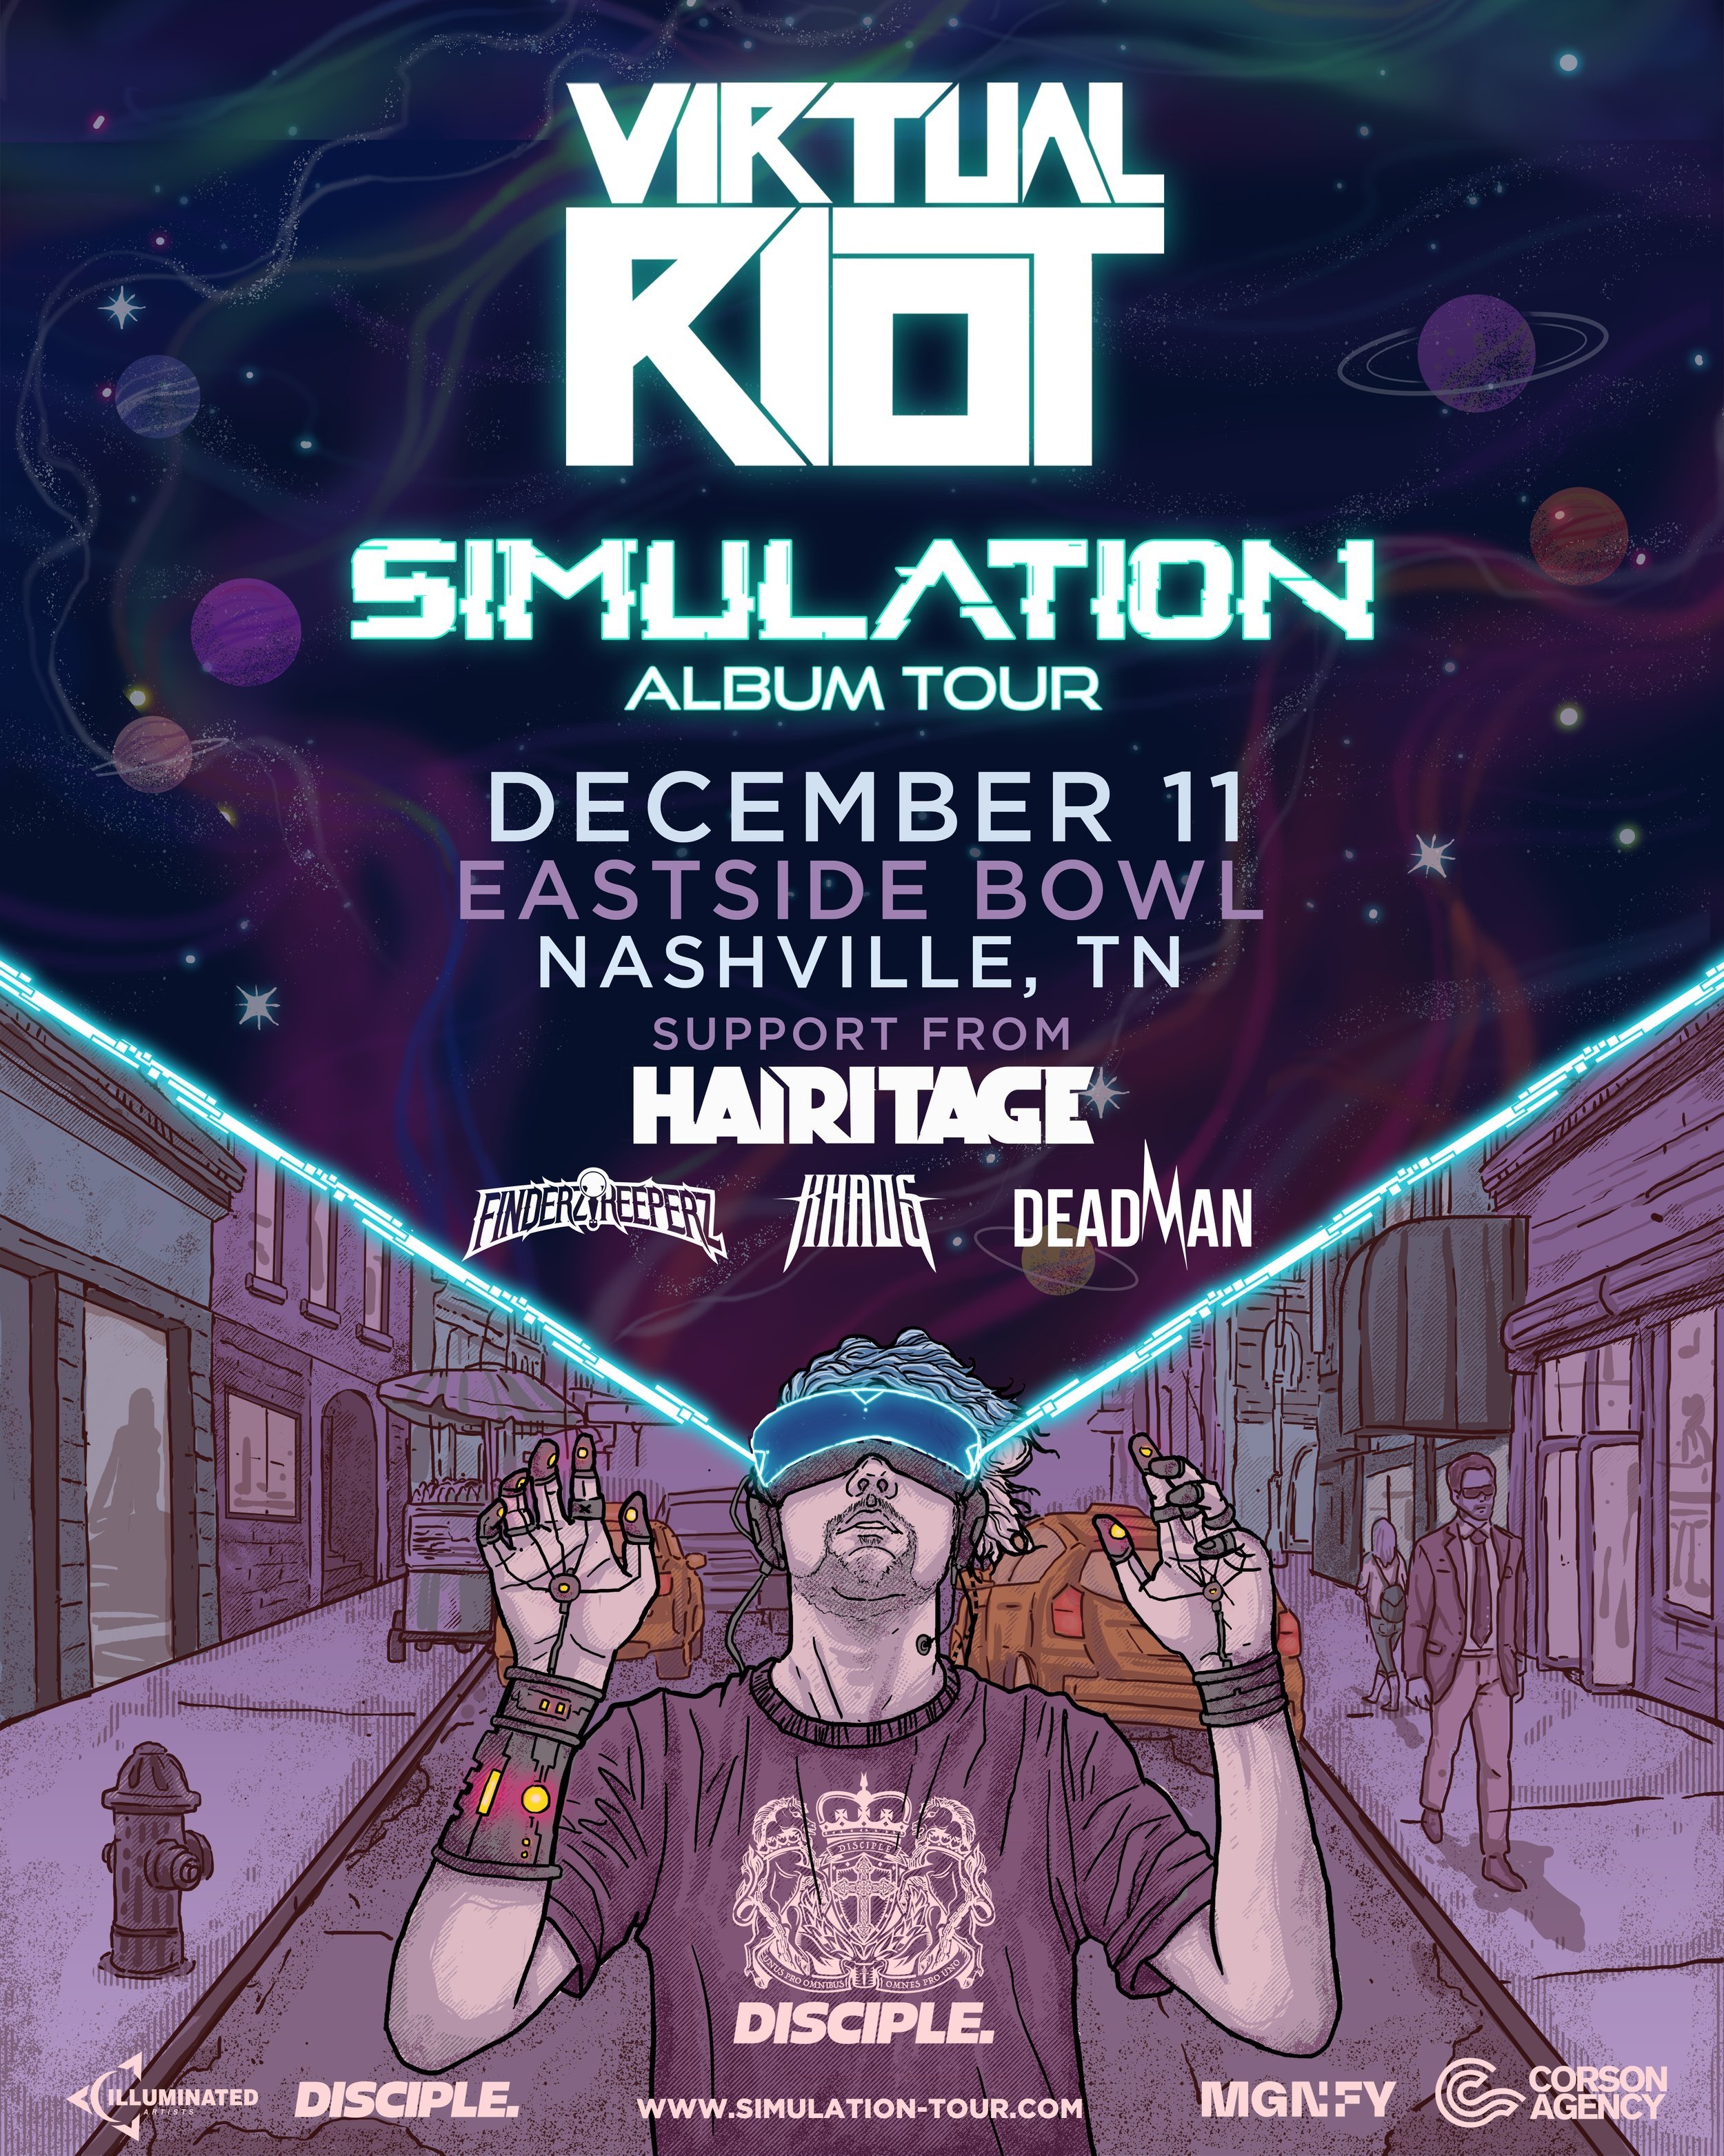 Simulation Album Tour featuring: Virtual Riot, Heritage, Finderz Keeperz, Khaos & Deadman